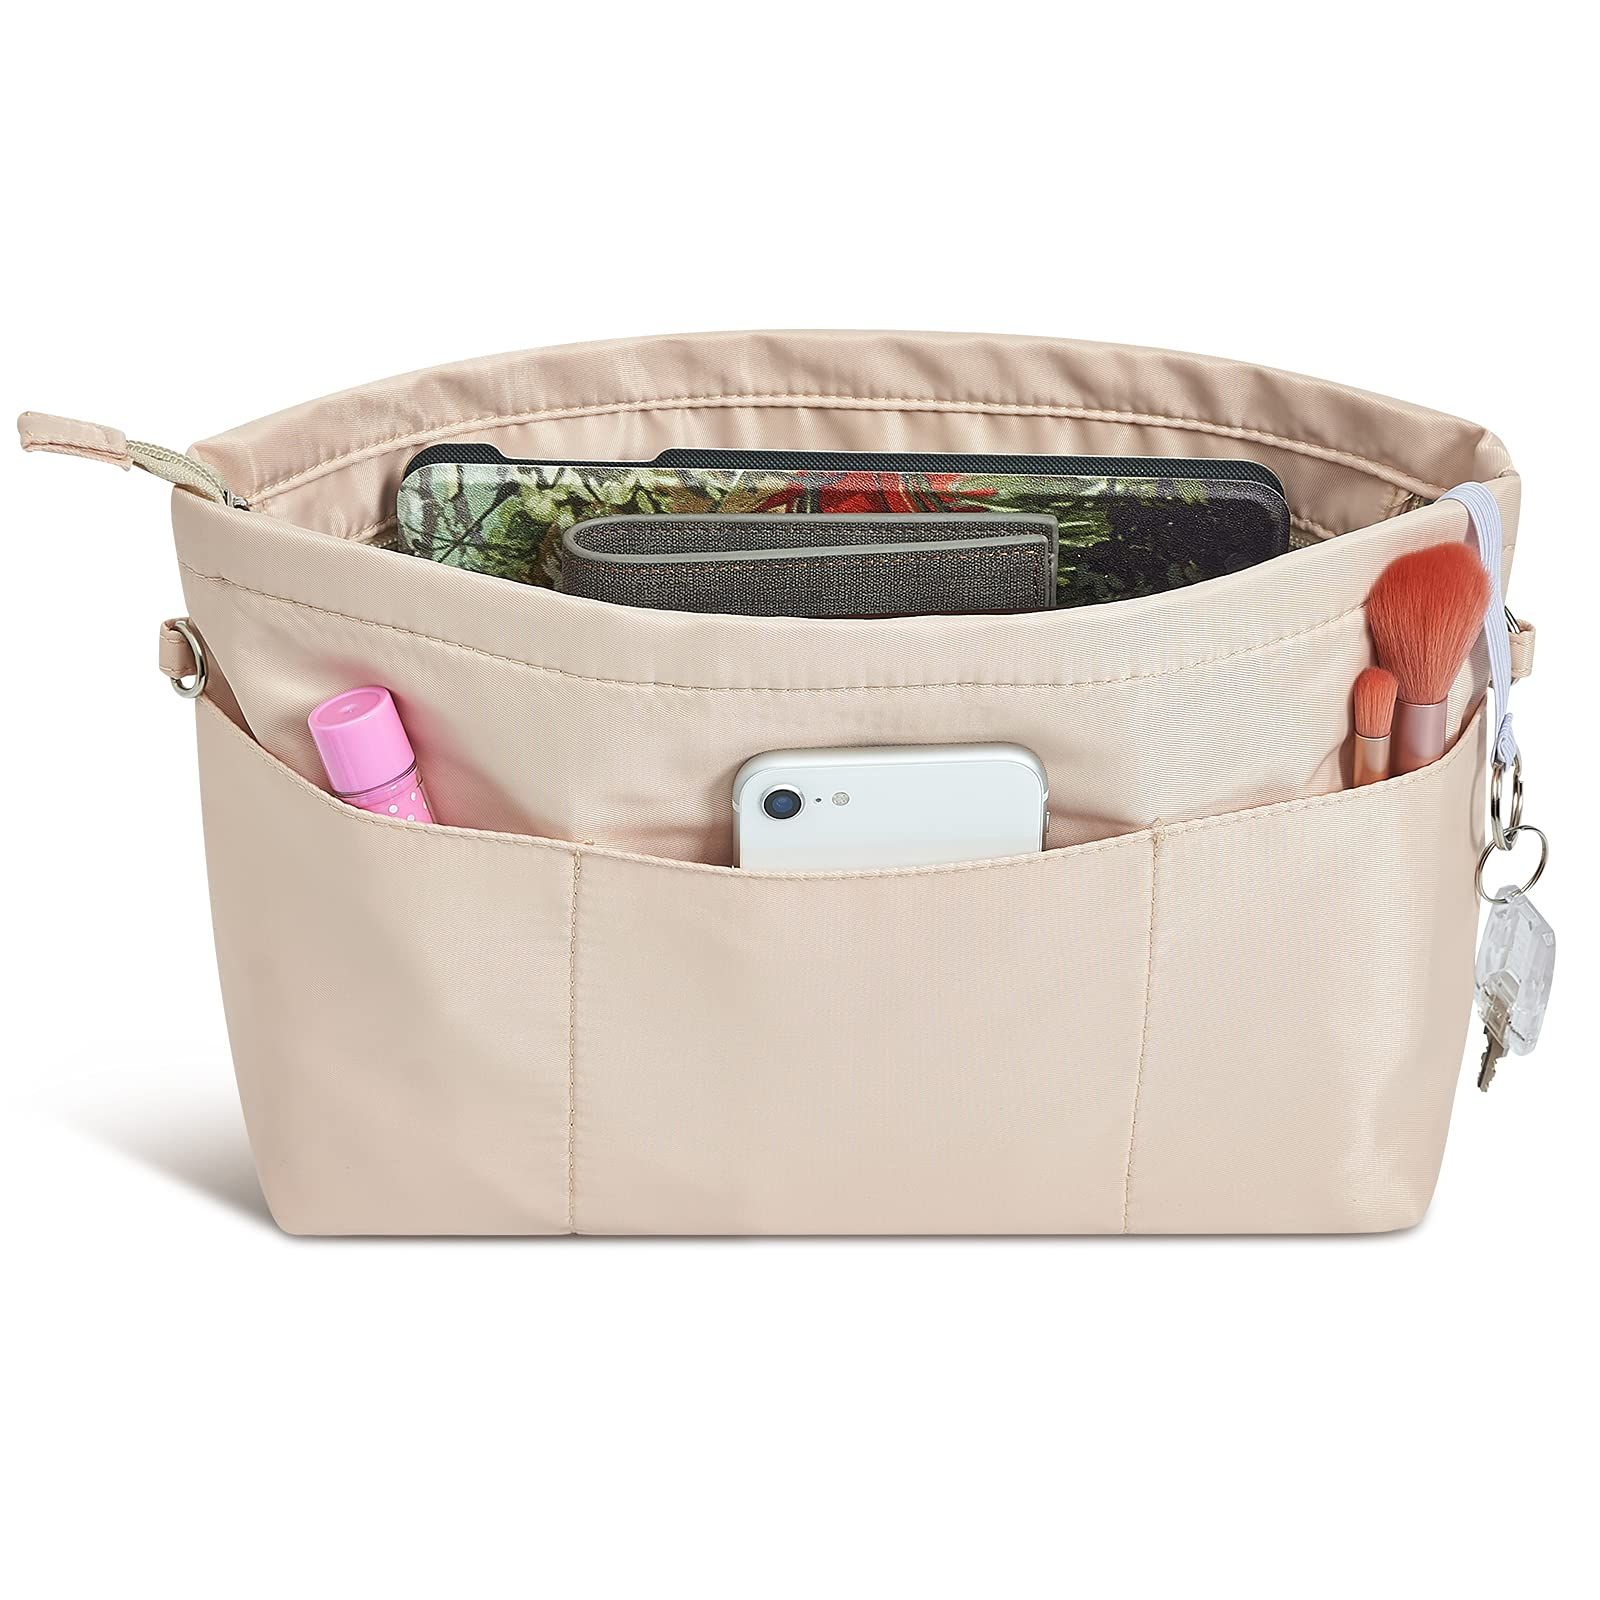 Gucci Boston Medium bag organizer with removable parts | Bag organizer